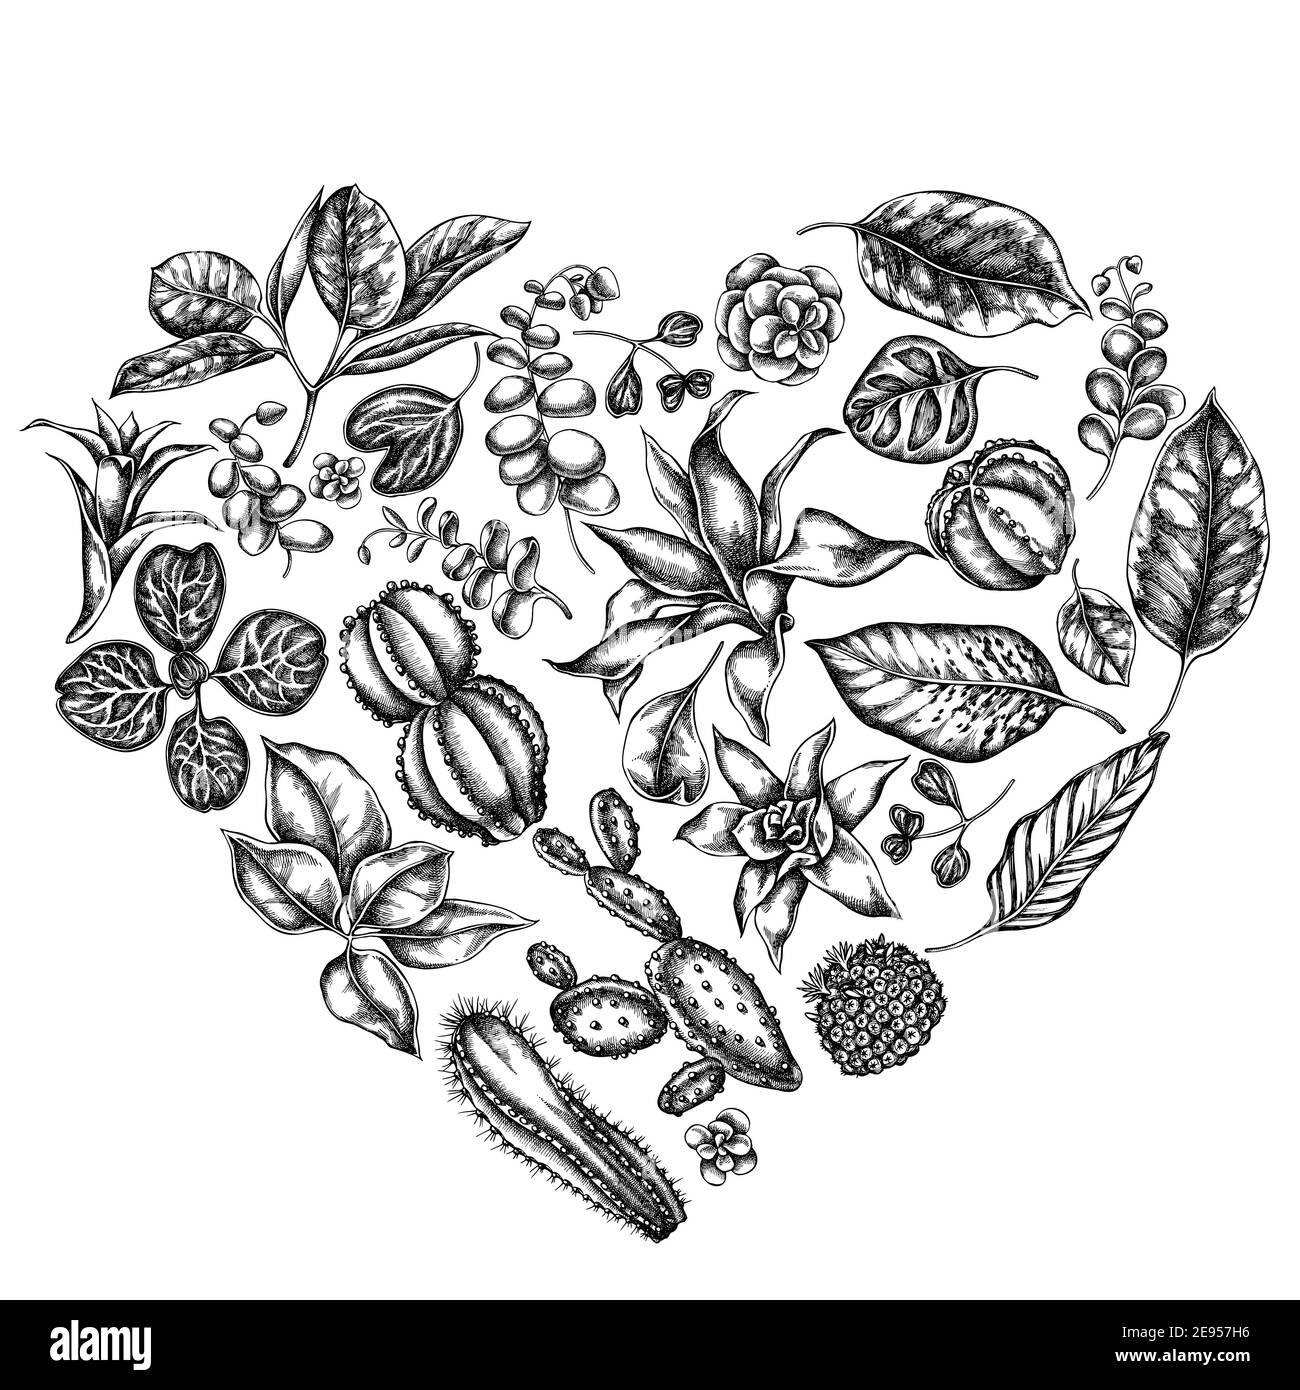 Heart floral design with black and white ficus, iresine, kalanchoe, calathea, guzmania, cactus Stock Vector